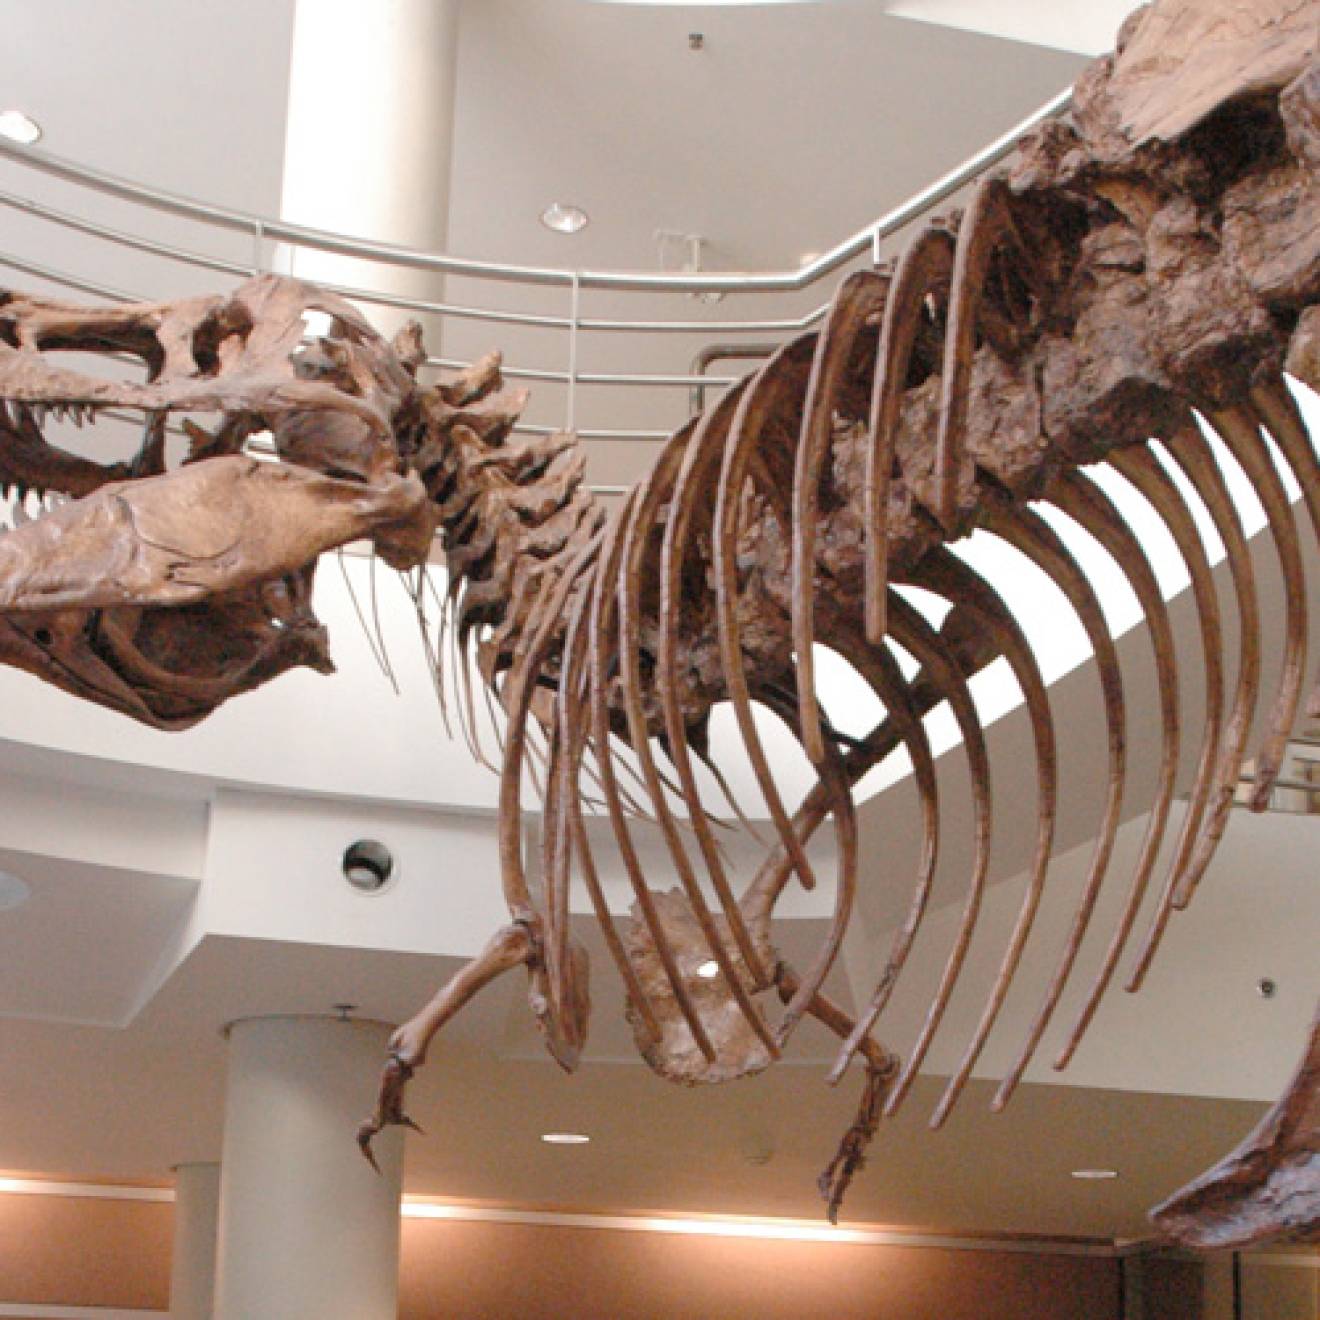 T. rex skeleton in a museum